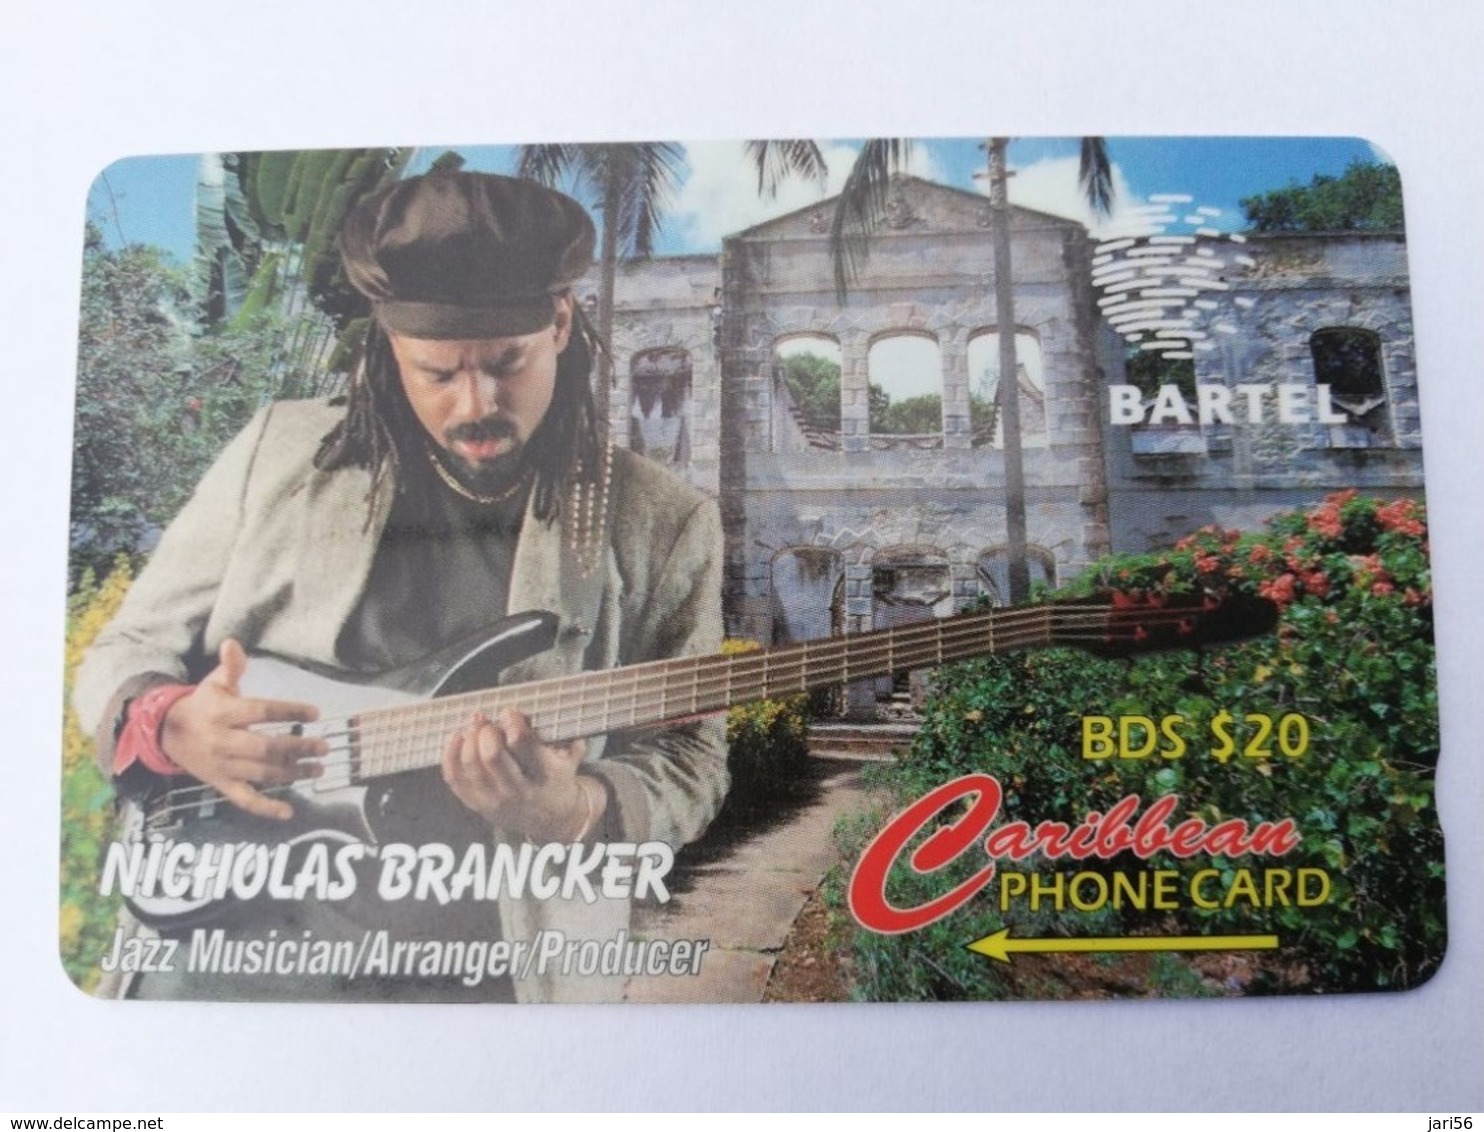 BARBADOS   $20-  Gpt Magnetic     BAR-125D  12CBDD  NICHOLAS BRANCKER   NEW  LOGO   Very Fine Used  Card  ** 2908** - Barbados (Barbuda)